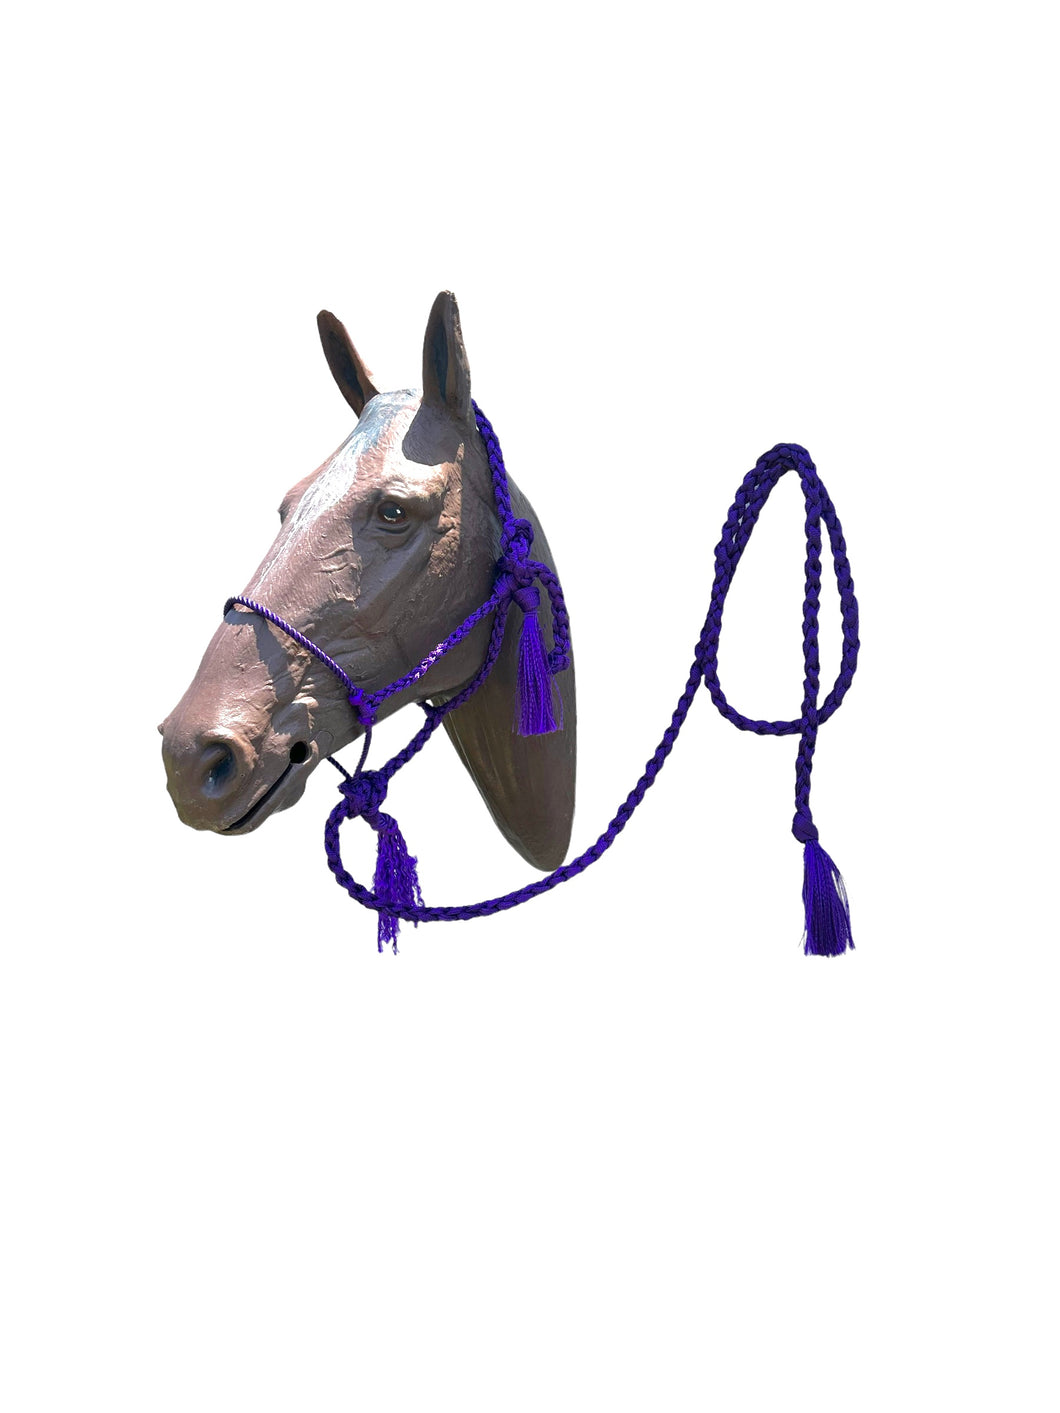 Lariat mule tape horse halter with lead purple